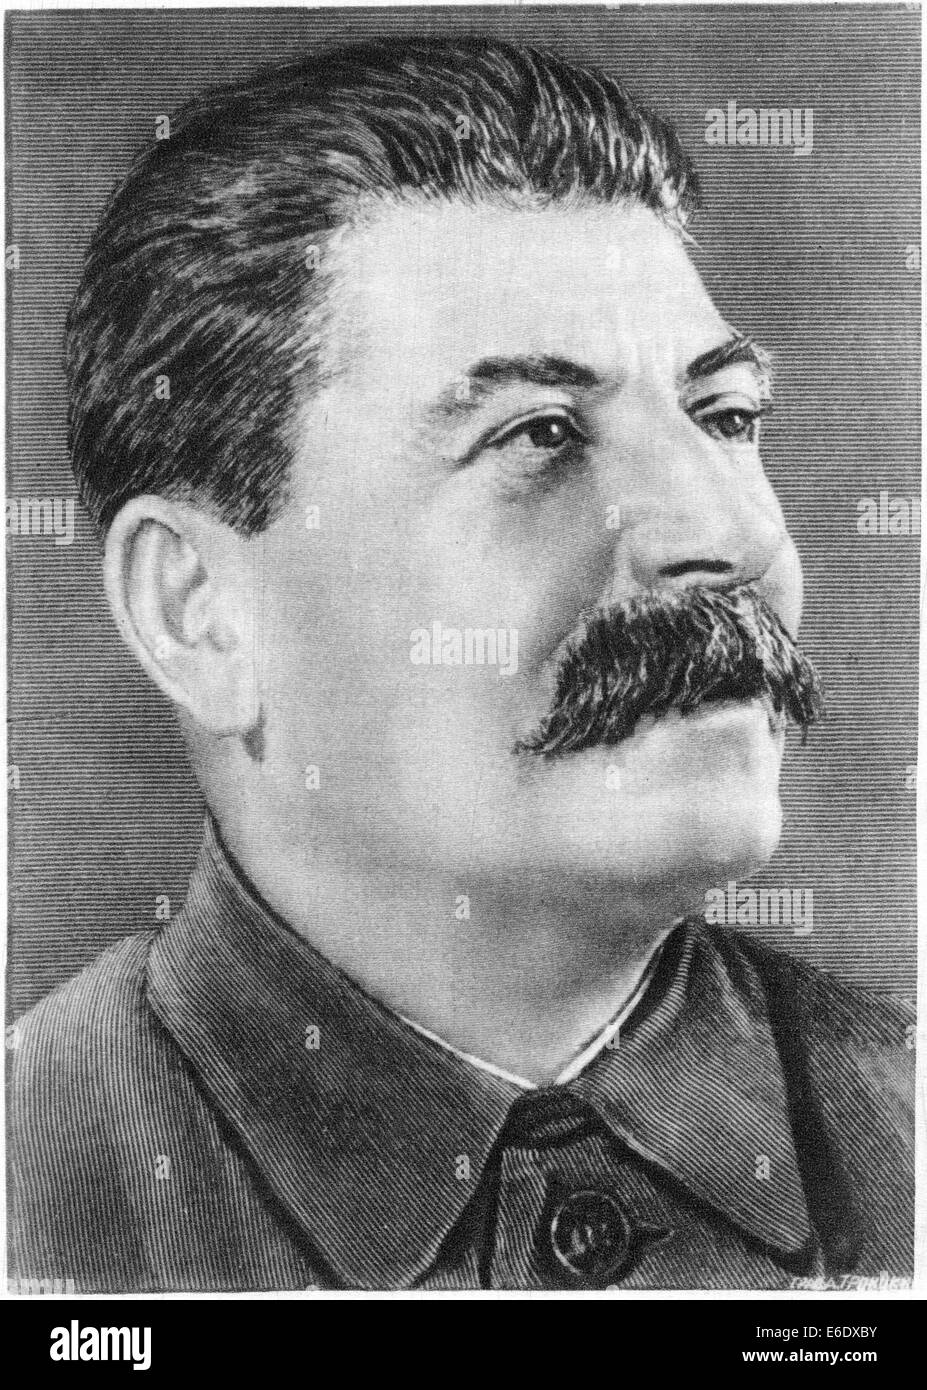 Joseph Stalin, Leader of Soviet Union 1922-52, Portrait Stock Photo